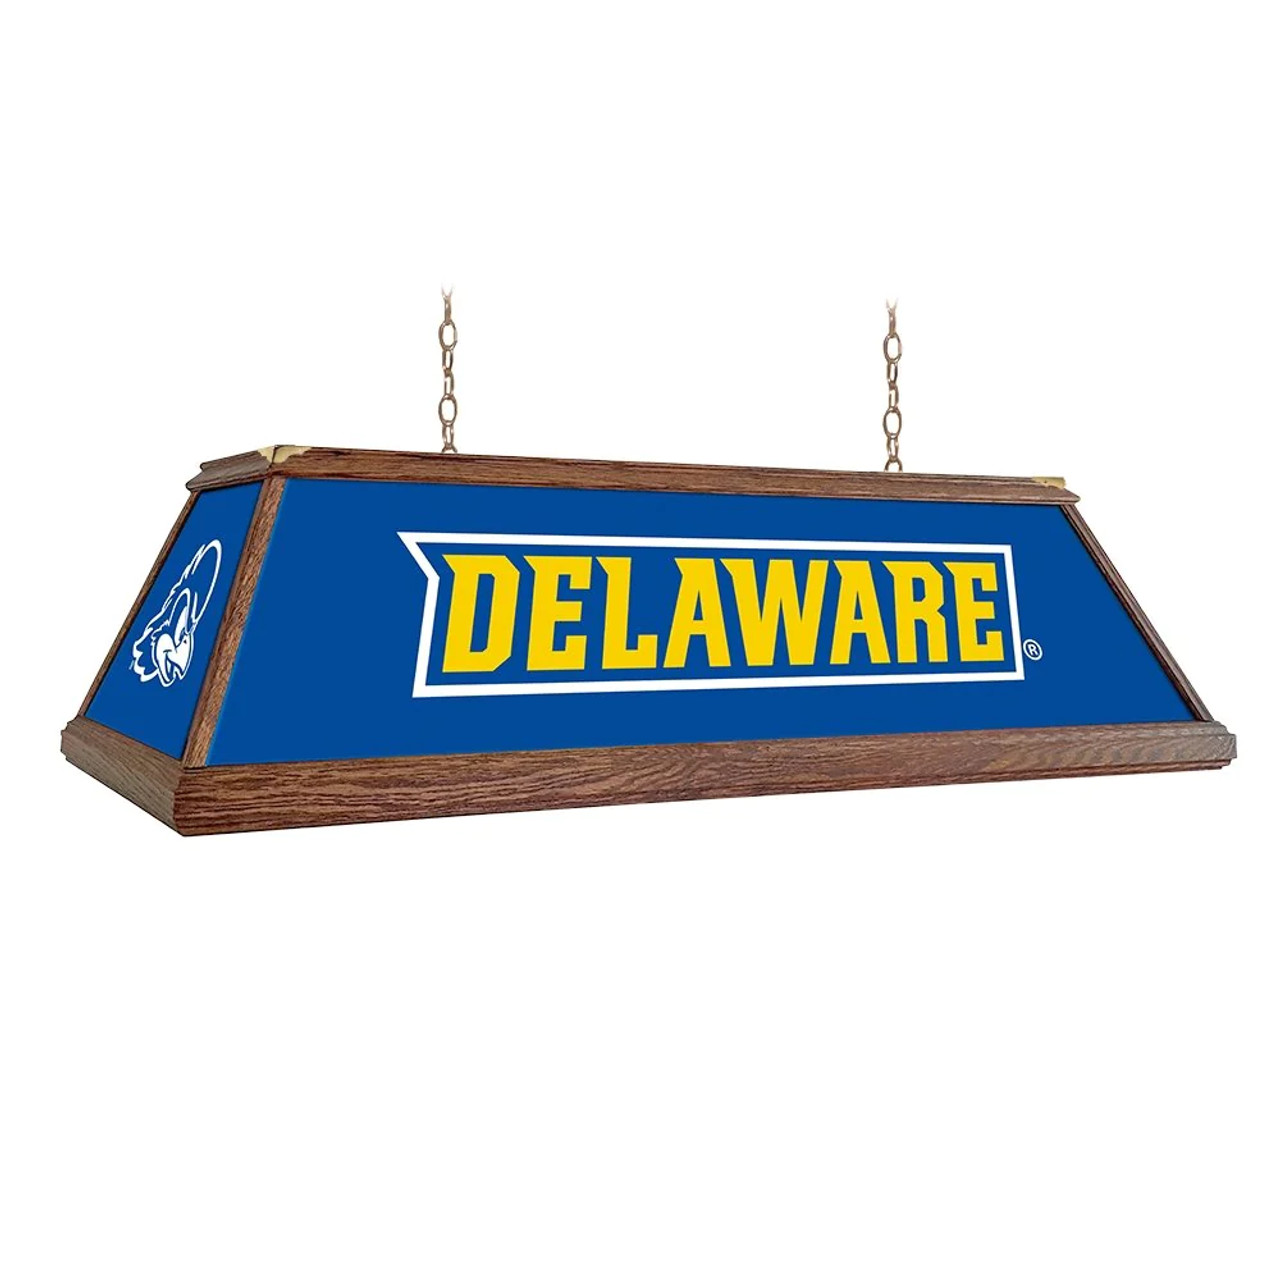 Delaware, Blue, Hens, Premium, Wood, Billiard, Pool, Table, Light, Lamp, NCDELA-330-01A, NCDELA-330-01B, The Fan-Brand, 697842107310